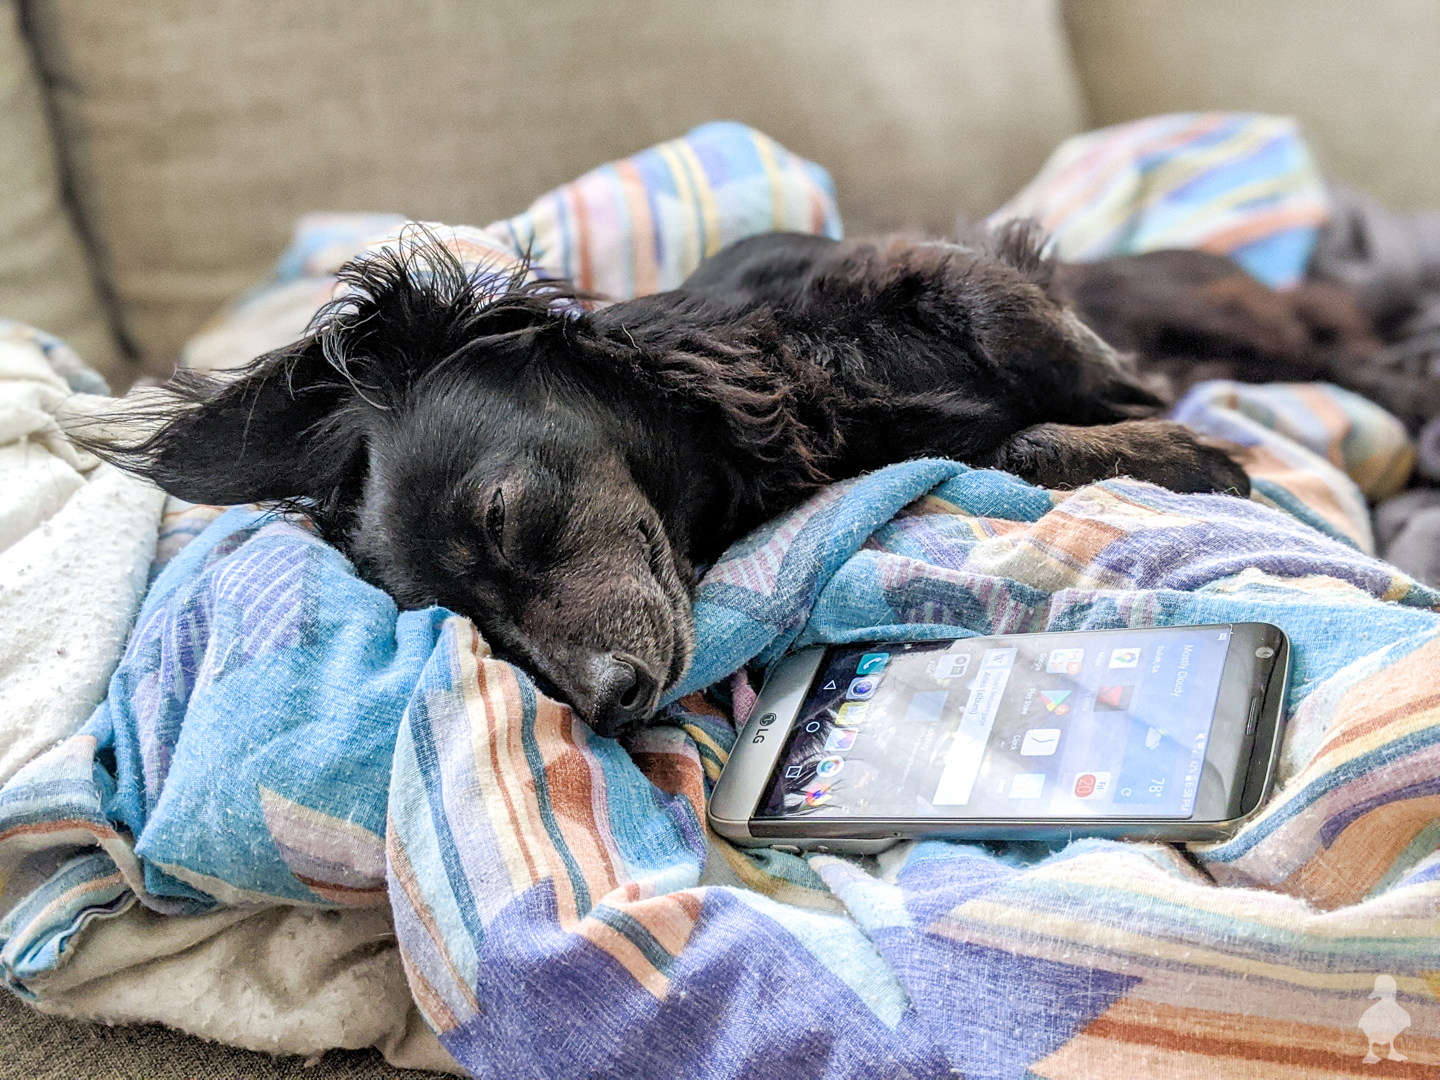 Stella likes to sleep on phones and remotes